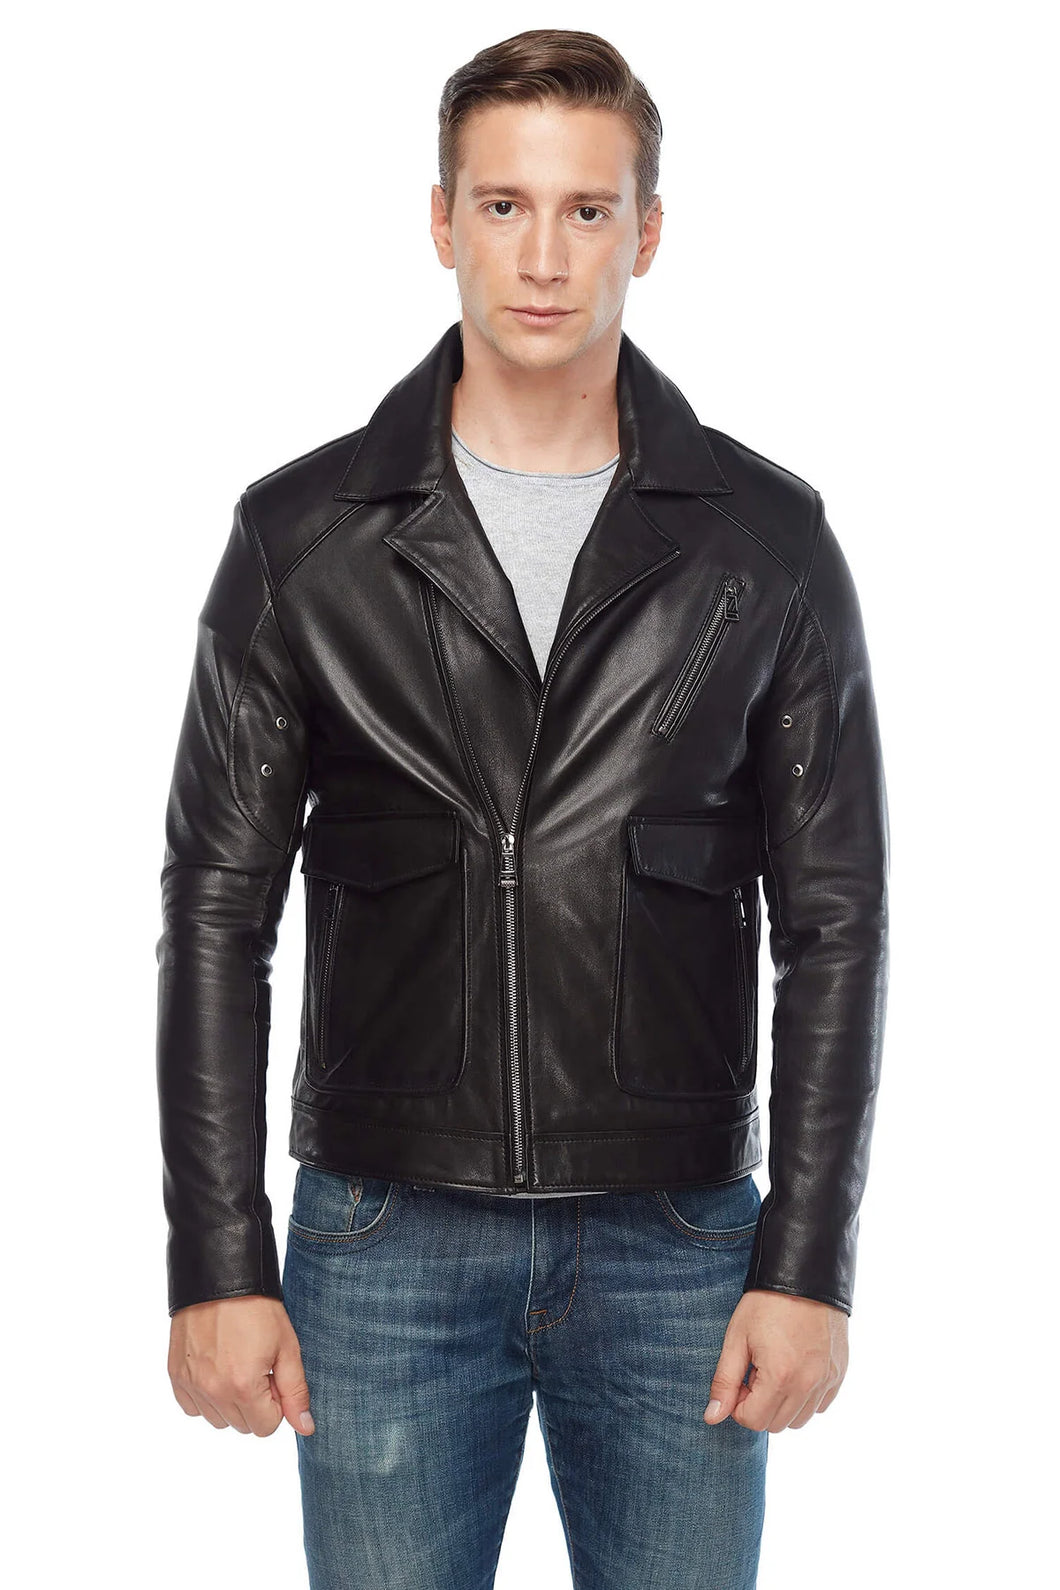 Real Leather Black Biker Jacket for Men – Boneshia